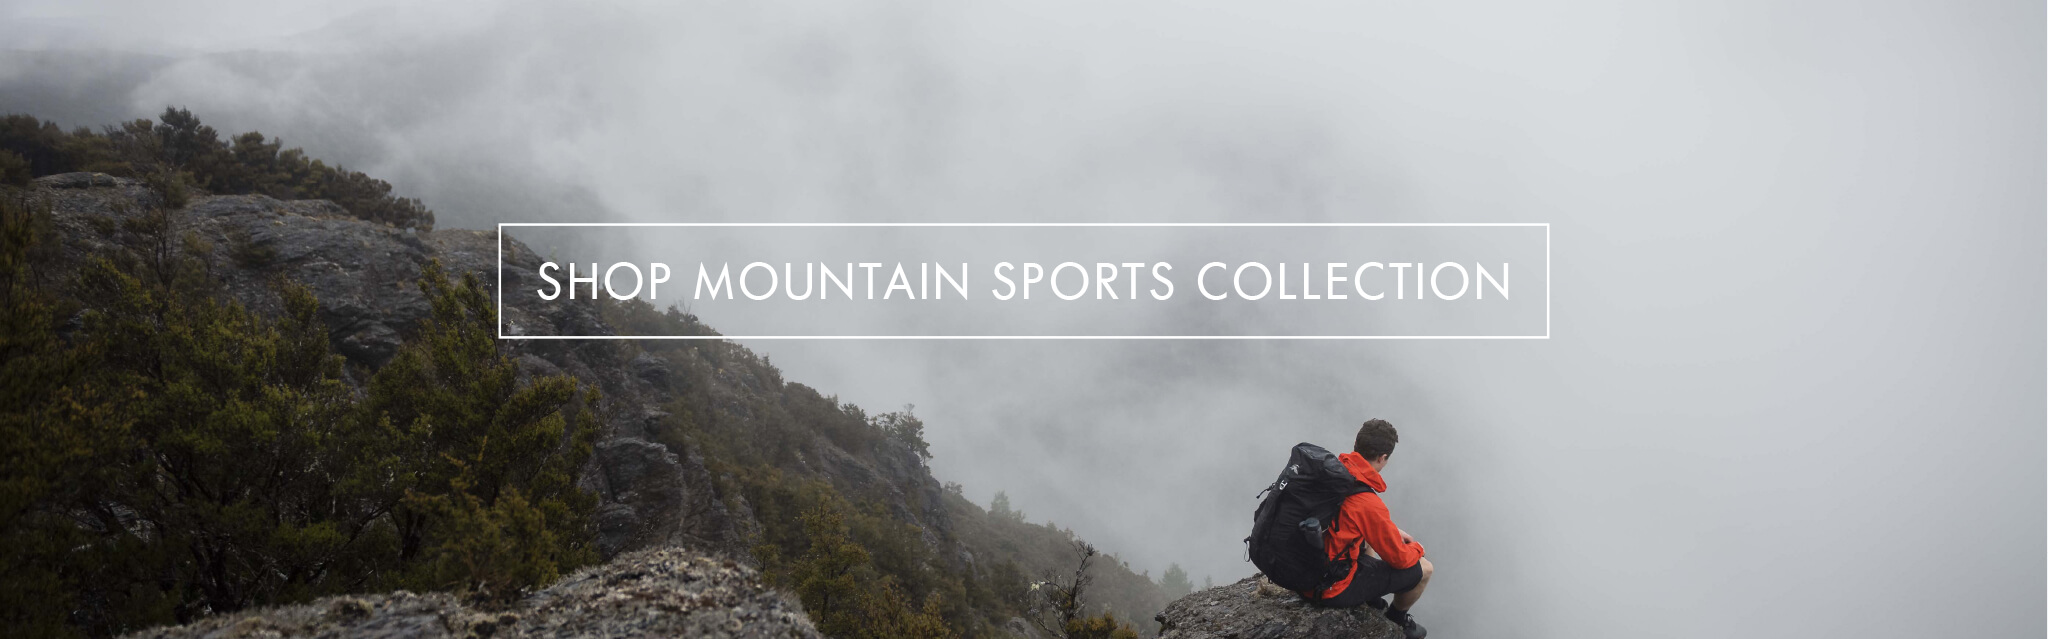 Shop Mountain Sports Collection